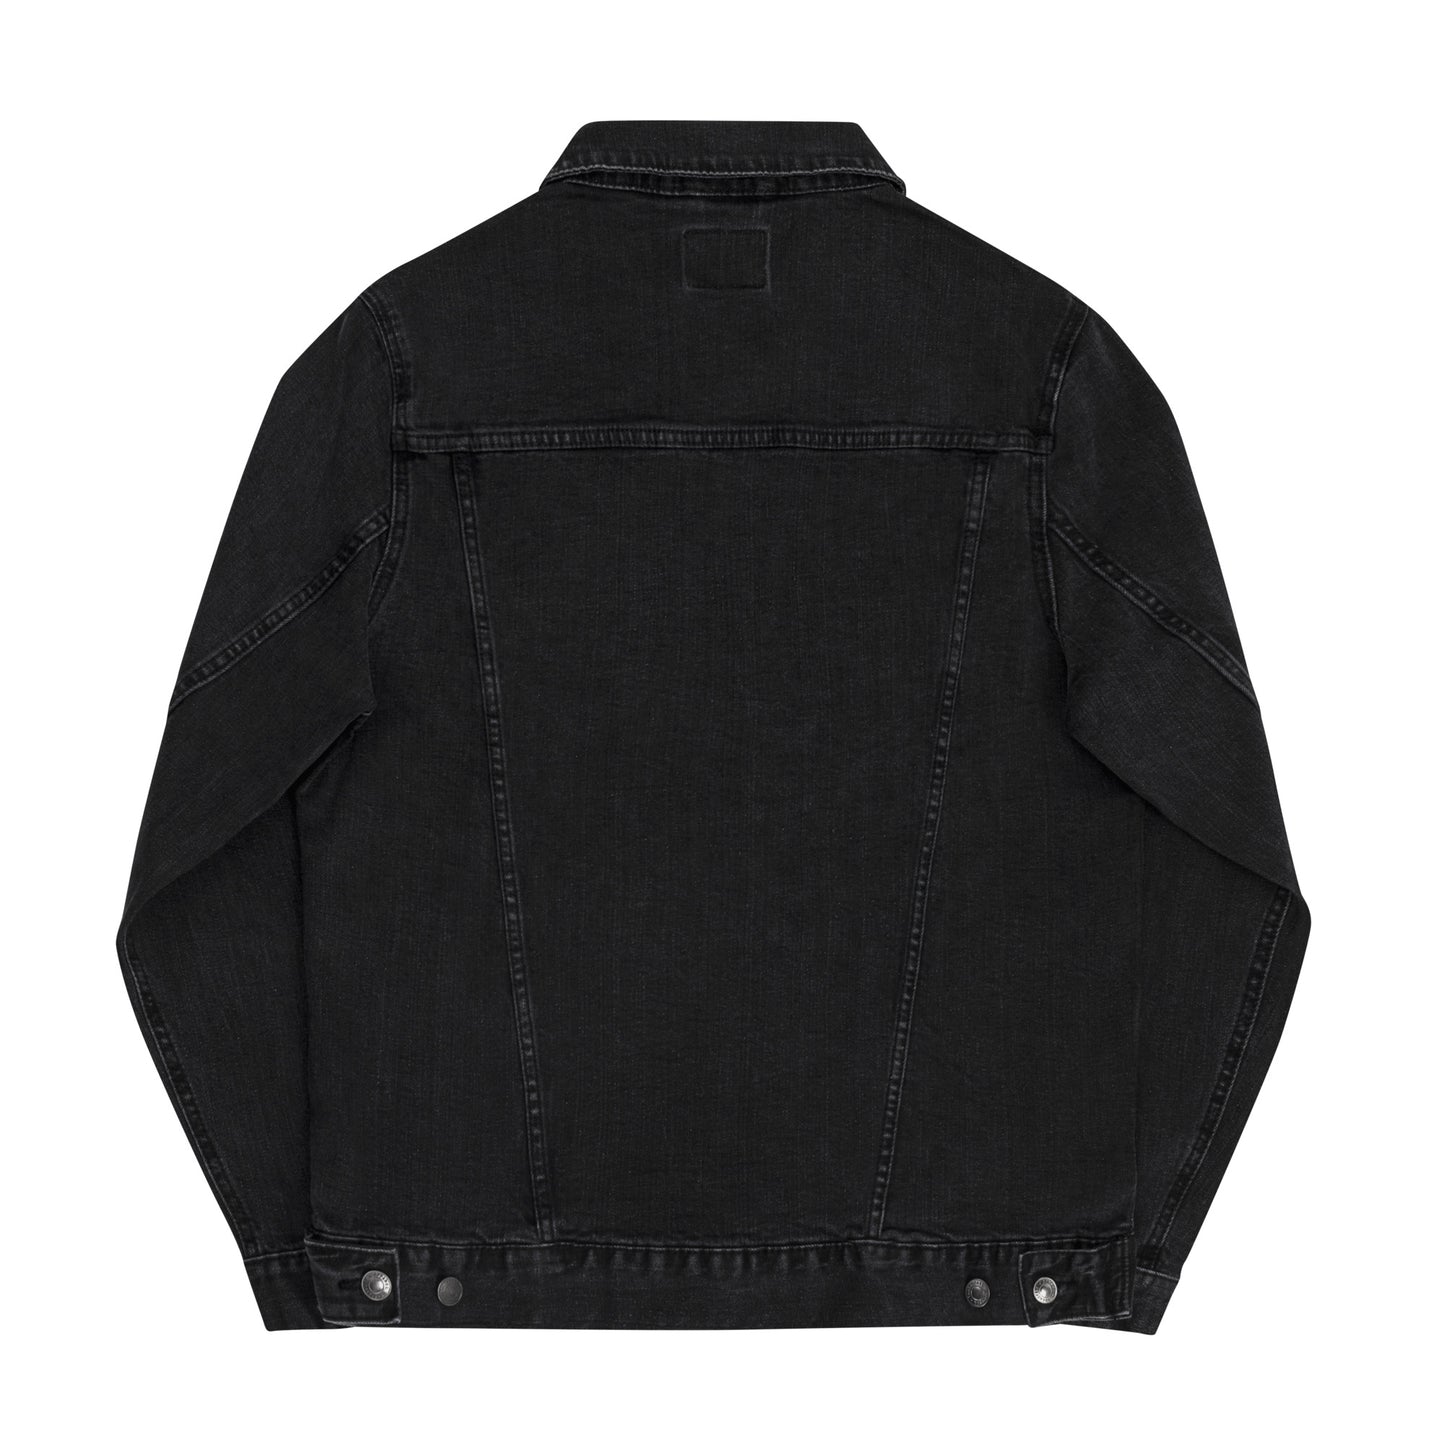 Space Daddy Embroidered Black Denim Jacket